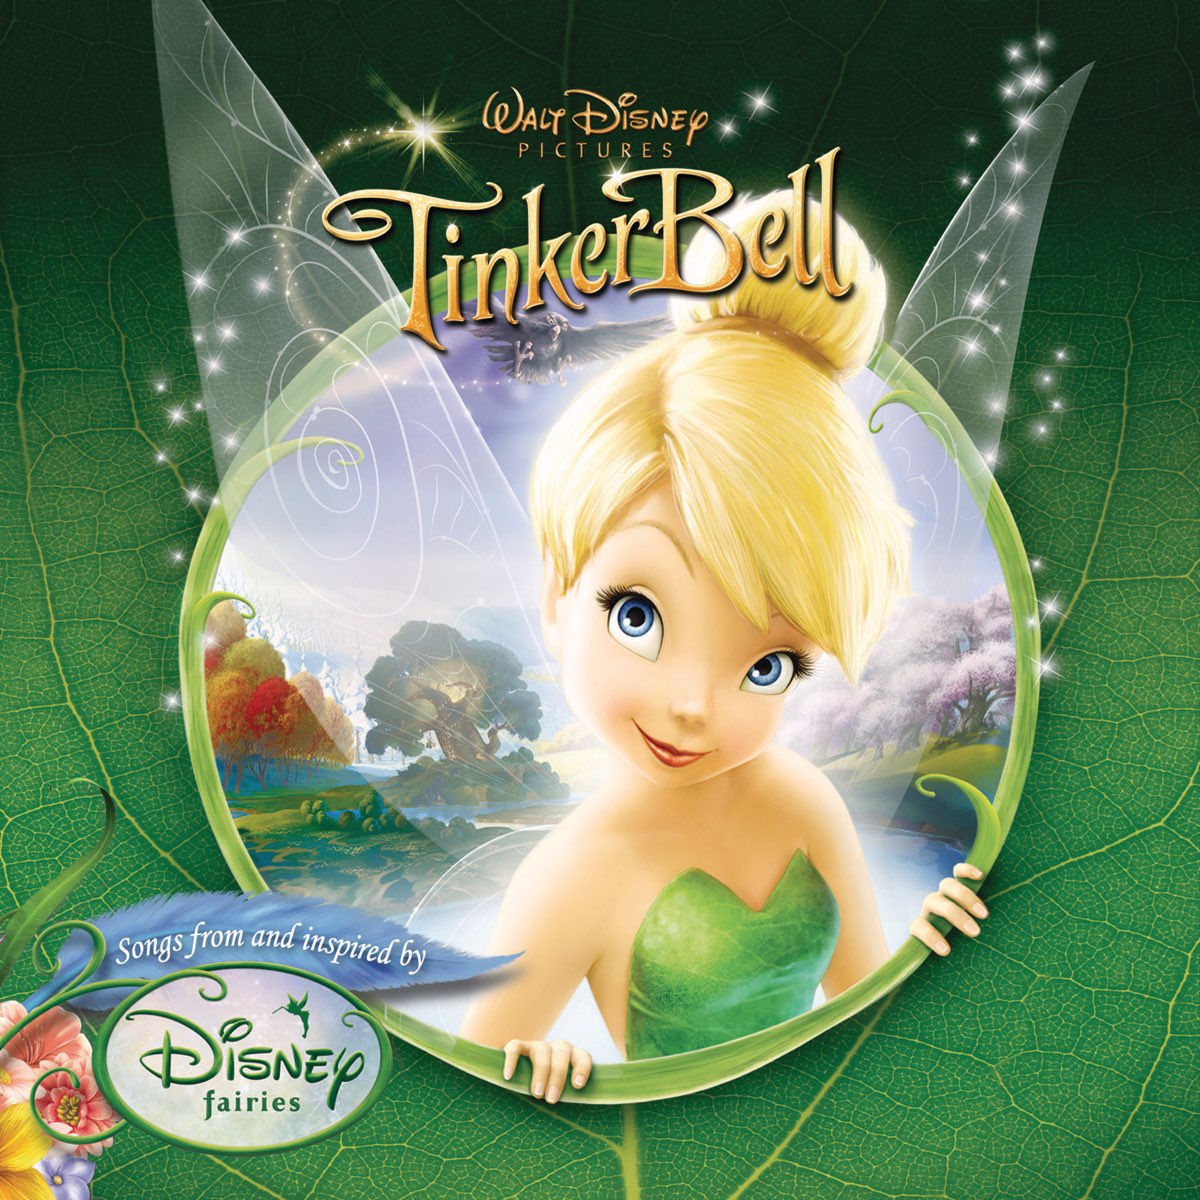 Disney Fairies: Tinker Bell (Dig)/Walt Disney Records